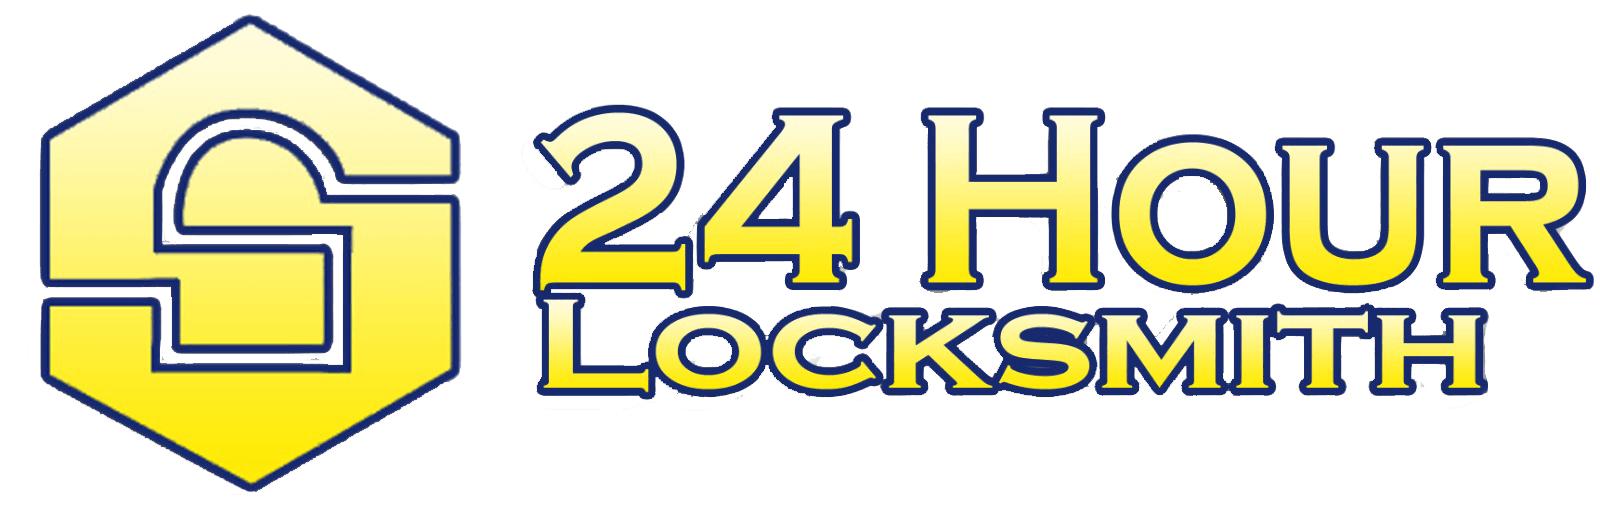 24 Hour Locksmith in Gilbert, AZ